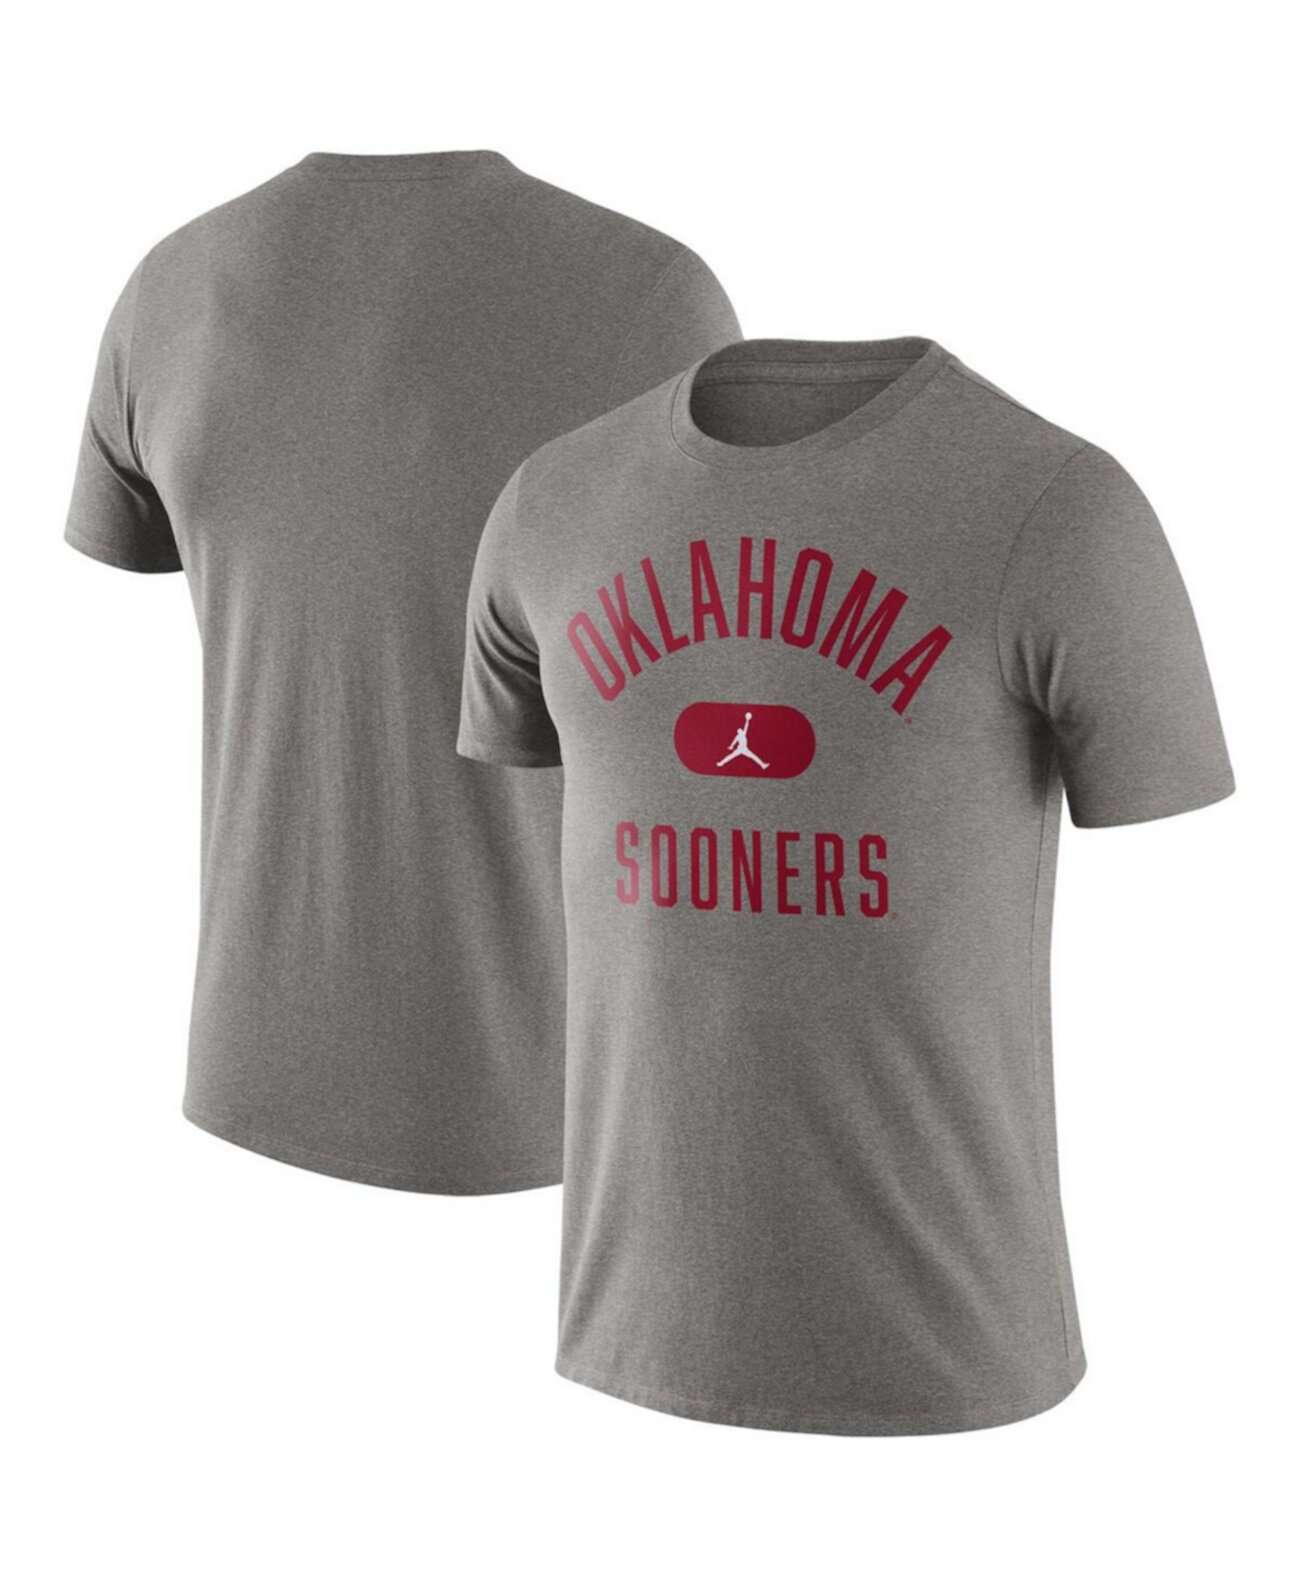 Мужская футболка Jordan Brand с символикой Oklahoma Sooners Jordan Manufacturing